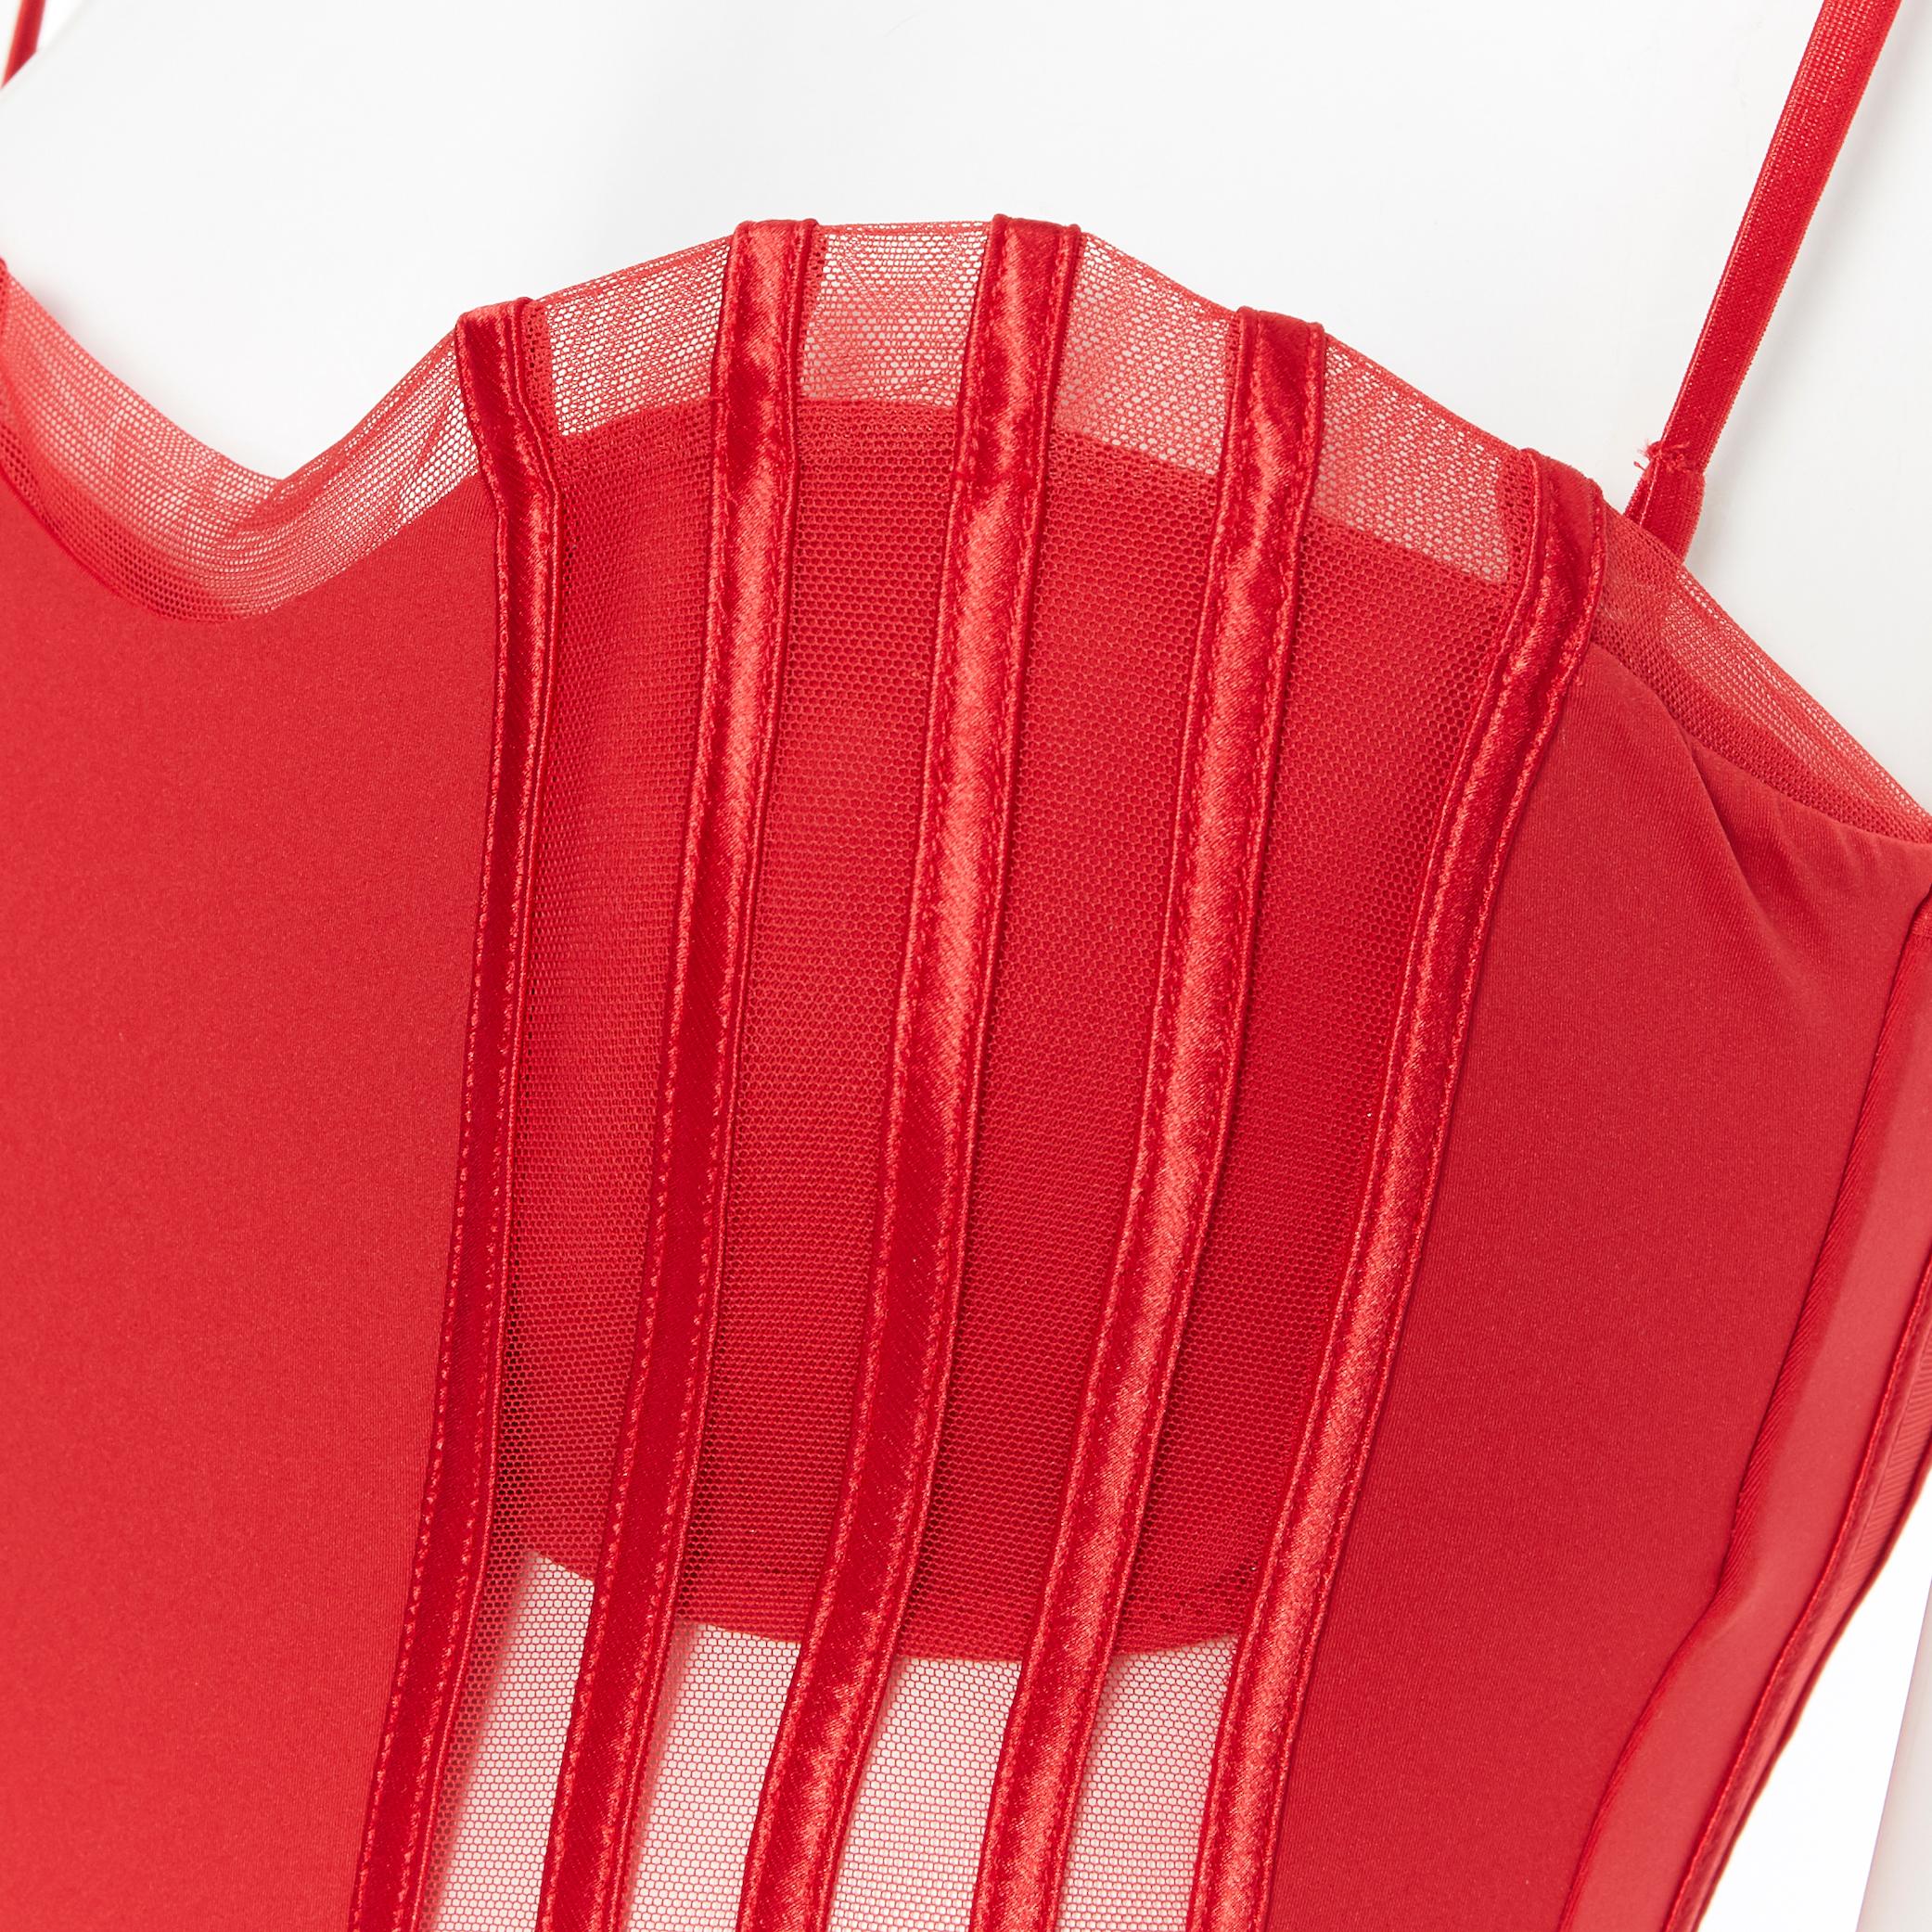 new LA PERLA Graphique Couture red boned sheer body monokini swimsuit IT44B M 1